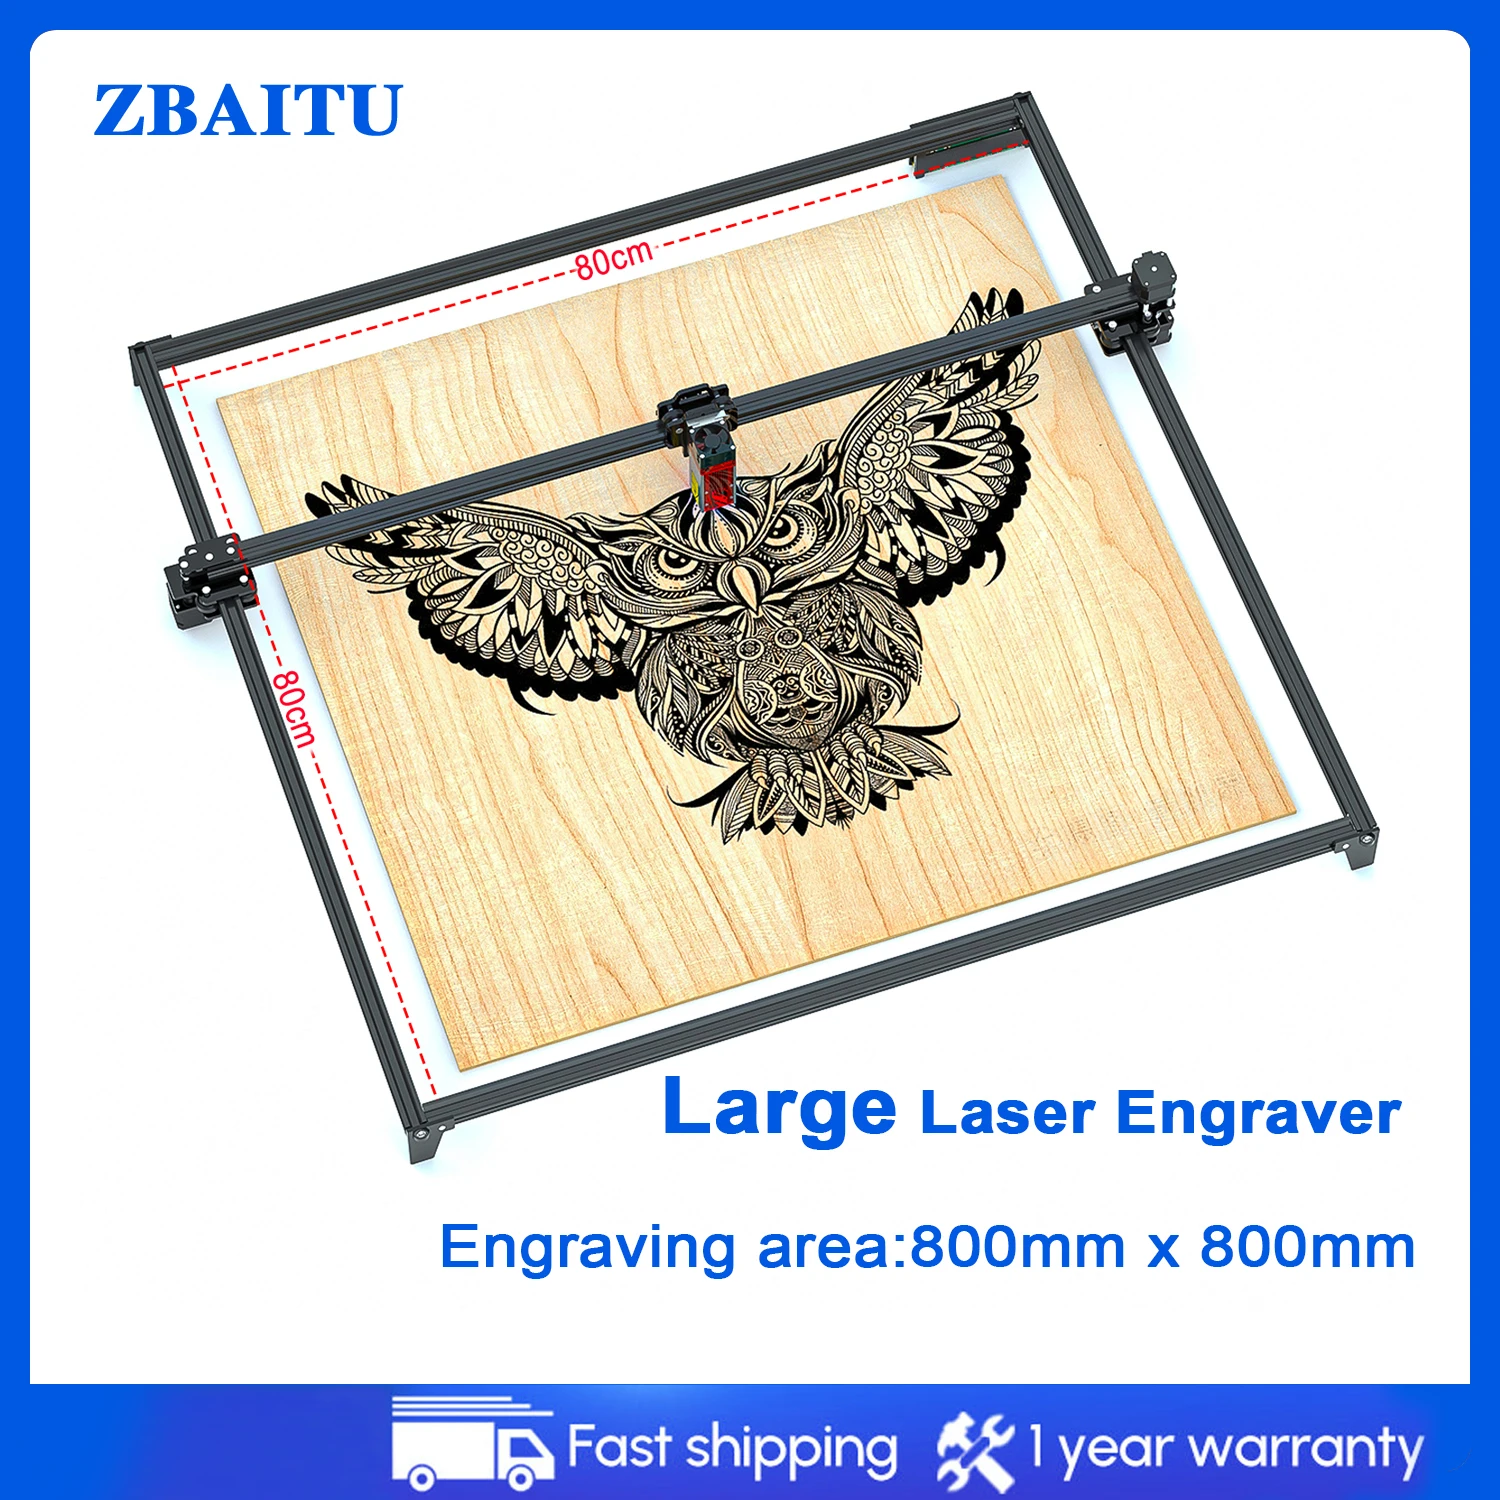 ZBAITU Large Laser Engraver 20W 800mmX800mm Engraving Area Power DIY Logo Printer Cutter Cutting CNC Woodworking Machinery Parts